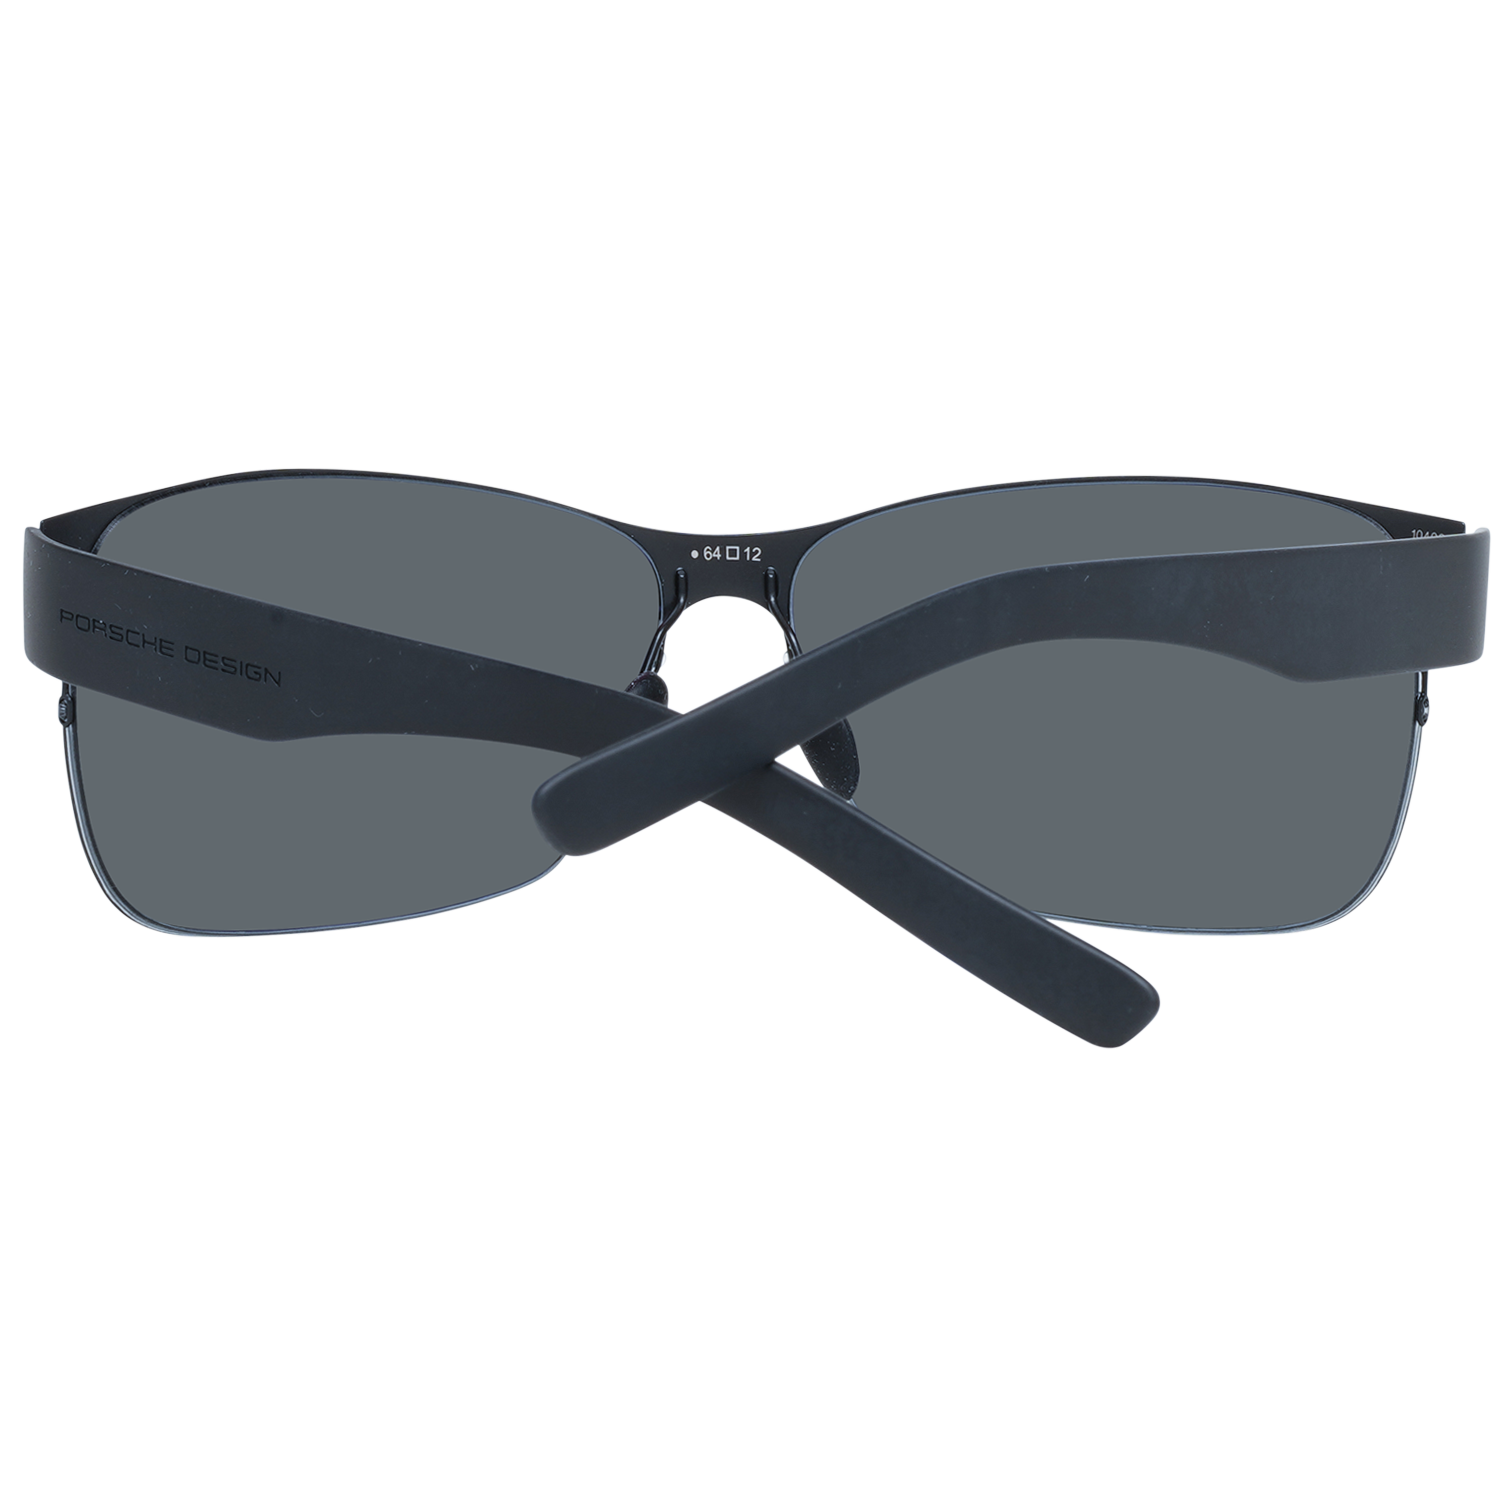 Porsche Design Sunglasses Unisex Black Rectangle P8582 E 64